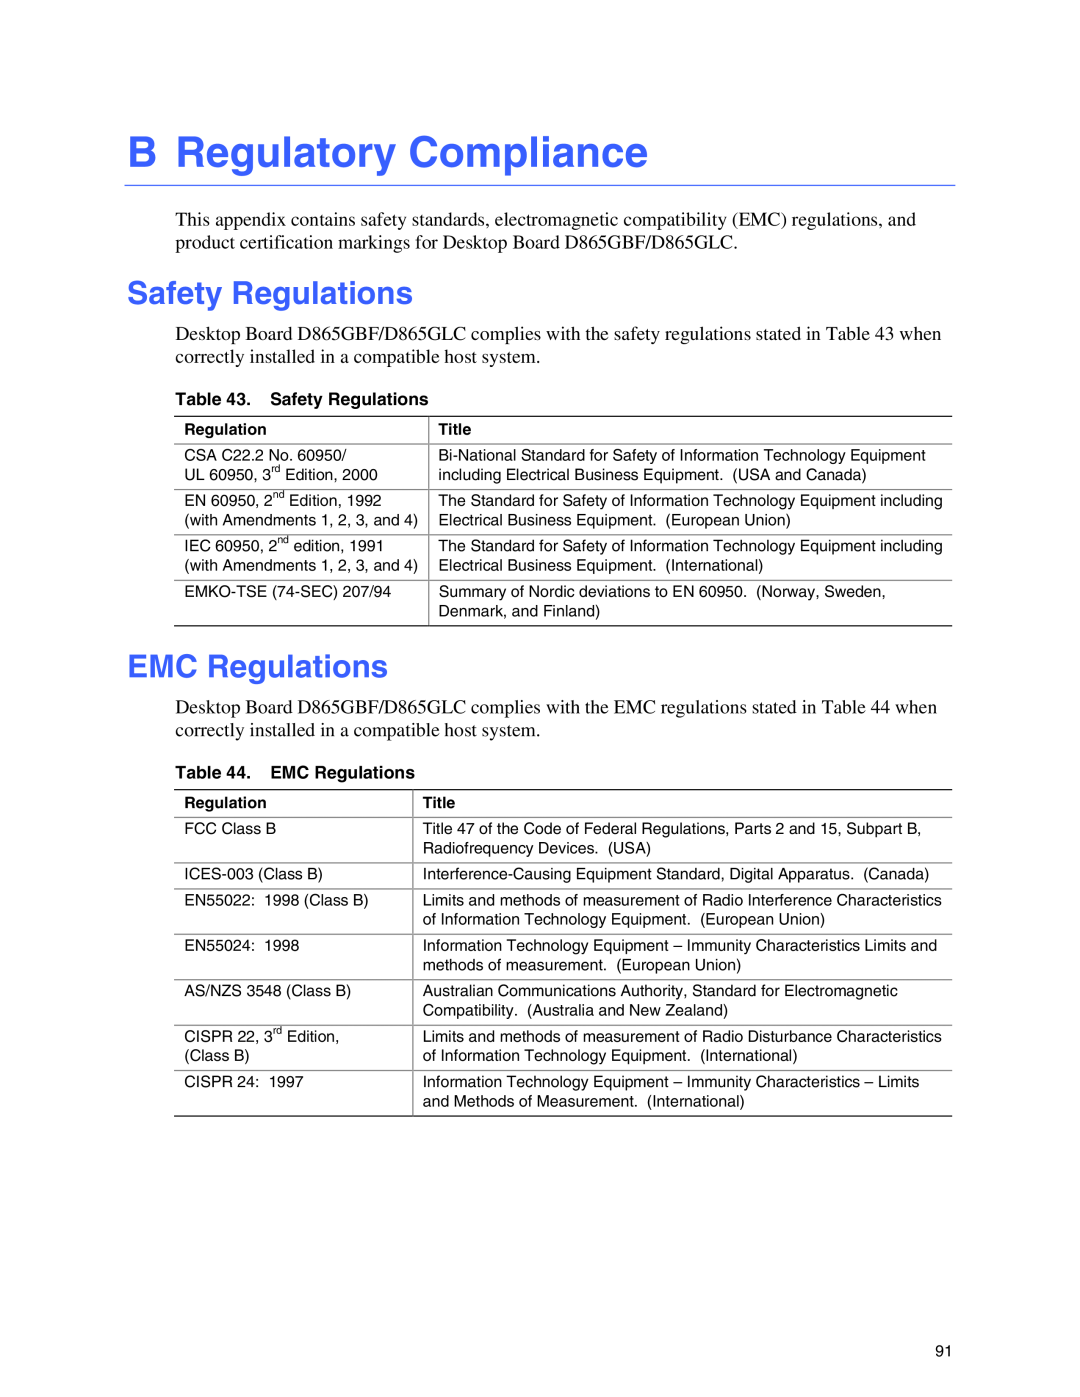 Intel D865GBF, D865GLC manual B Regulatory Compliance, Safety Regulations, EMC Regulations 